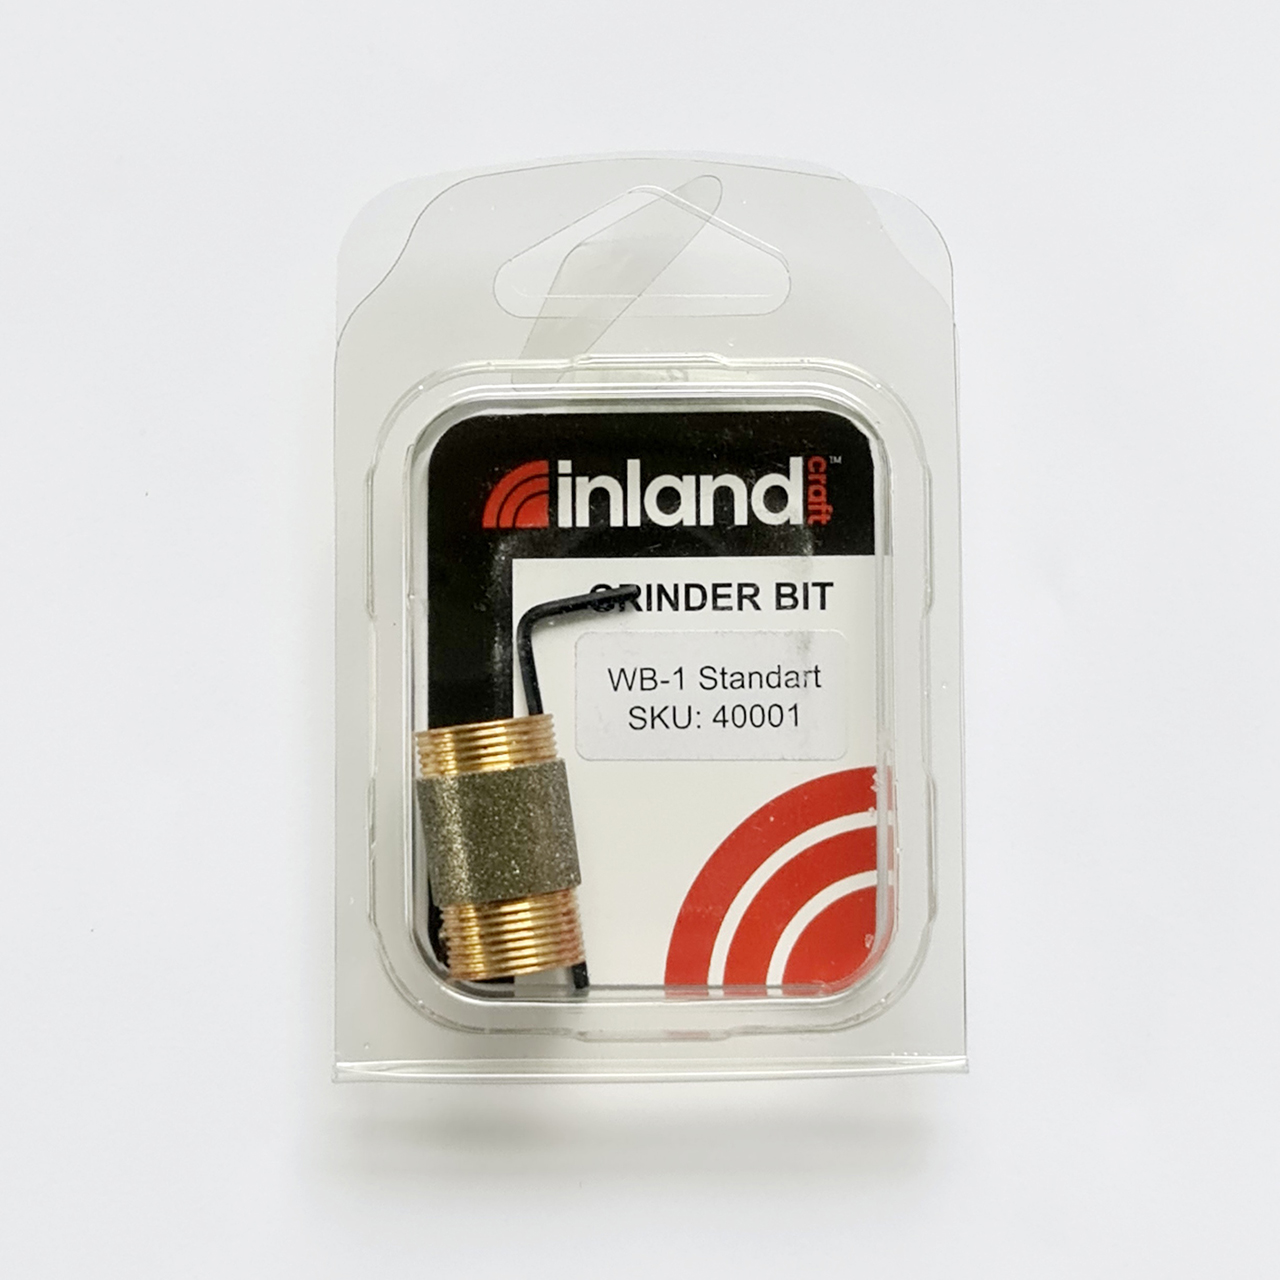 Inland Diamond bit 3/4"19mm standard